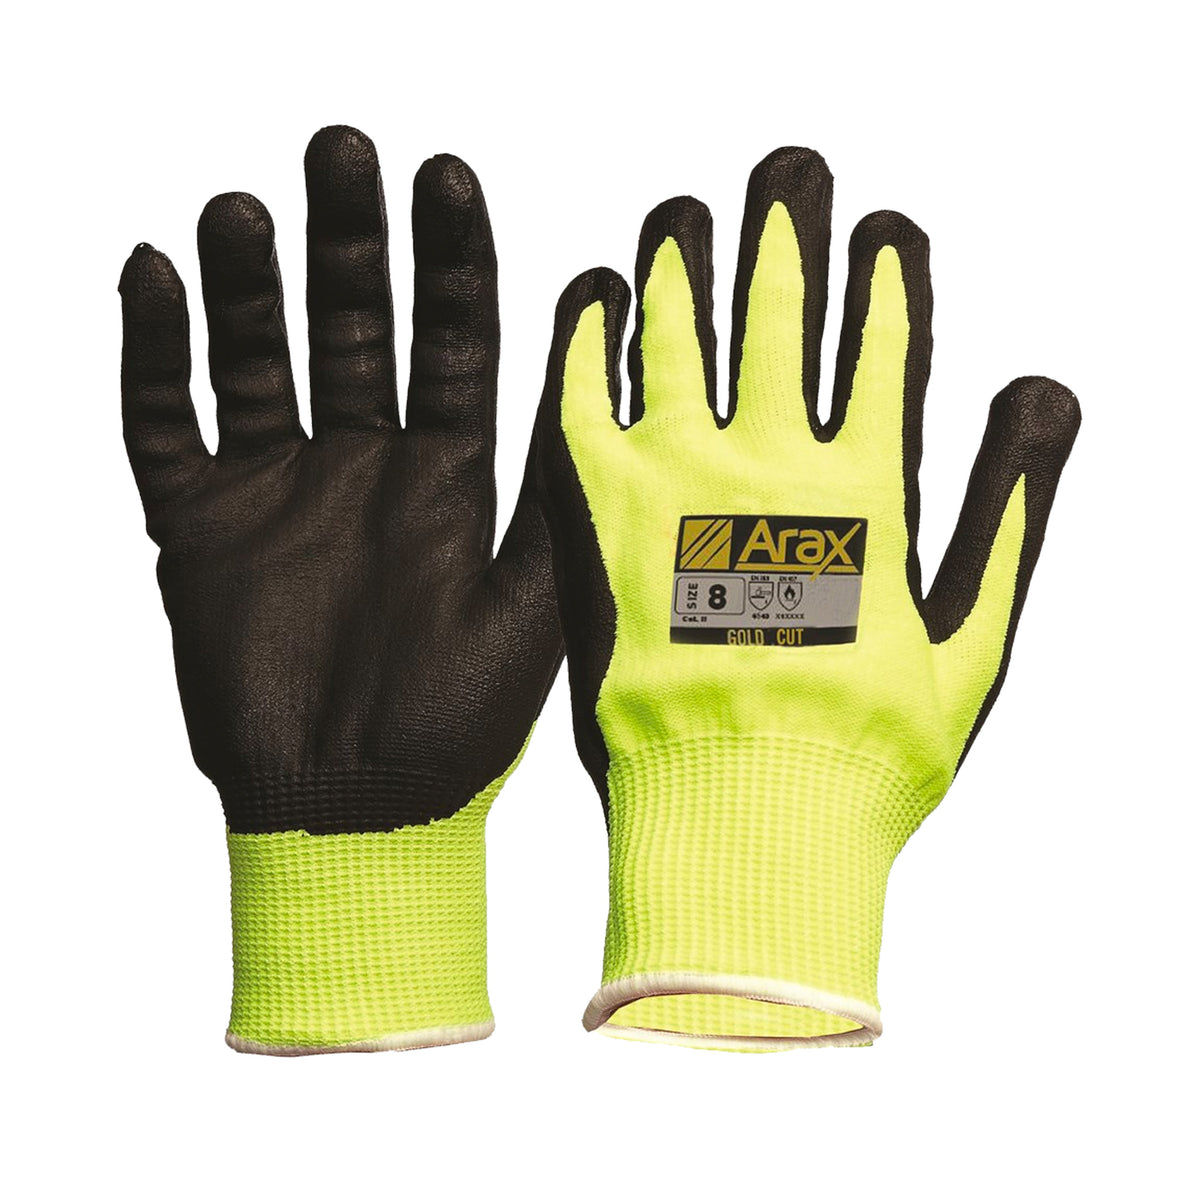 arax gold cut gloves